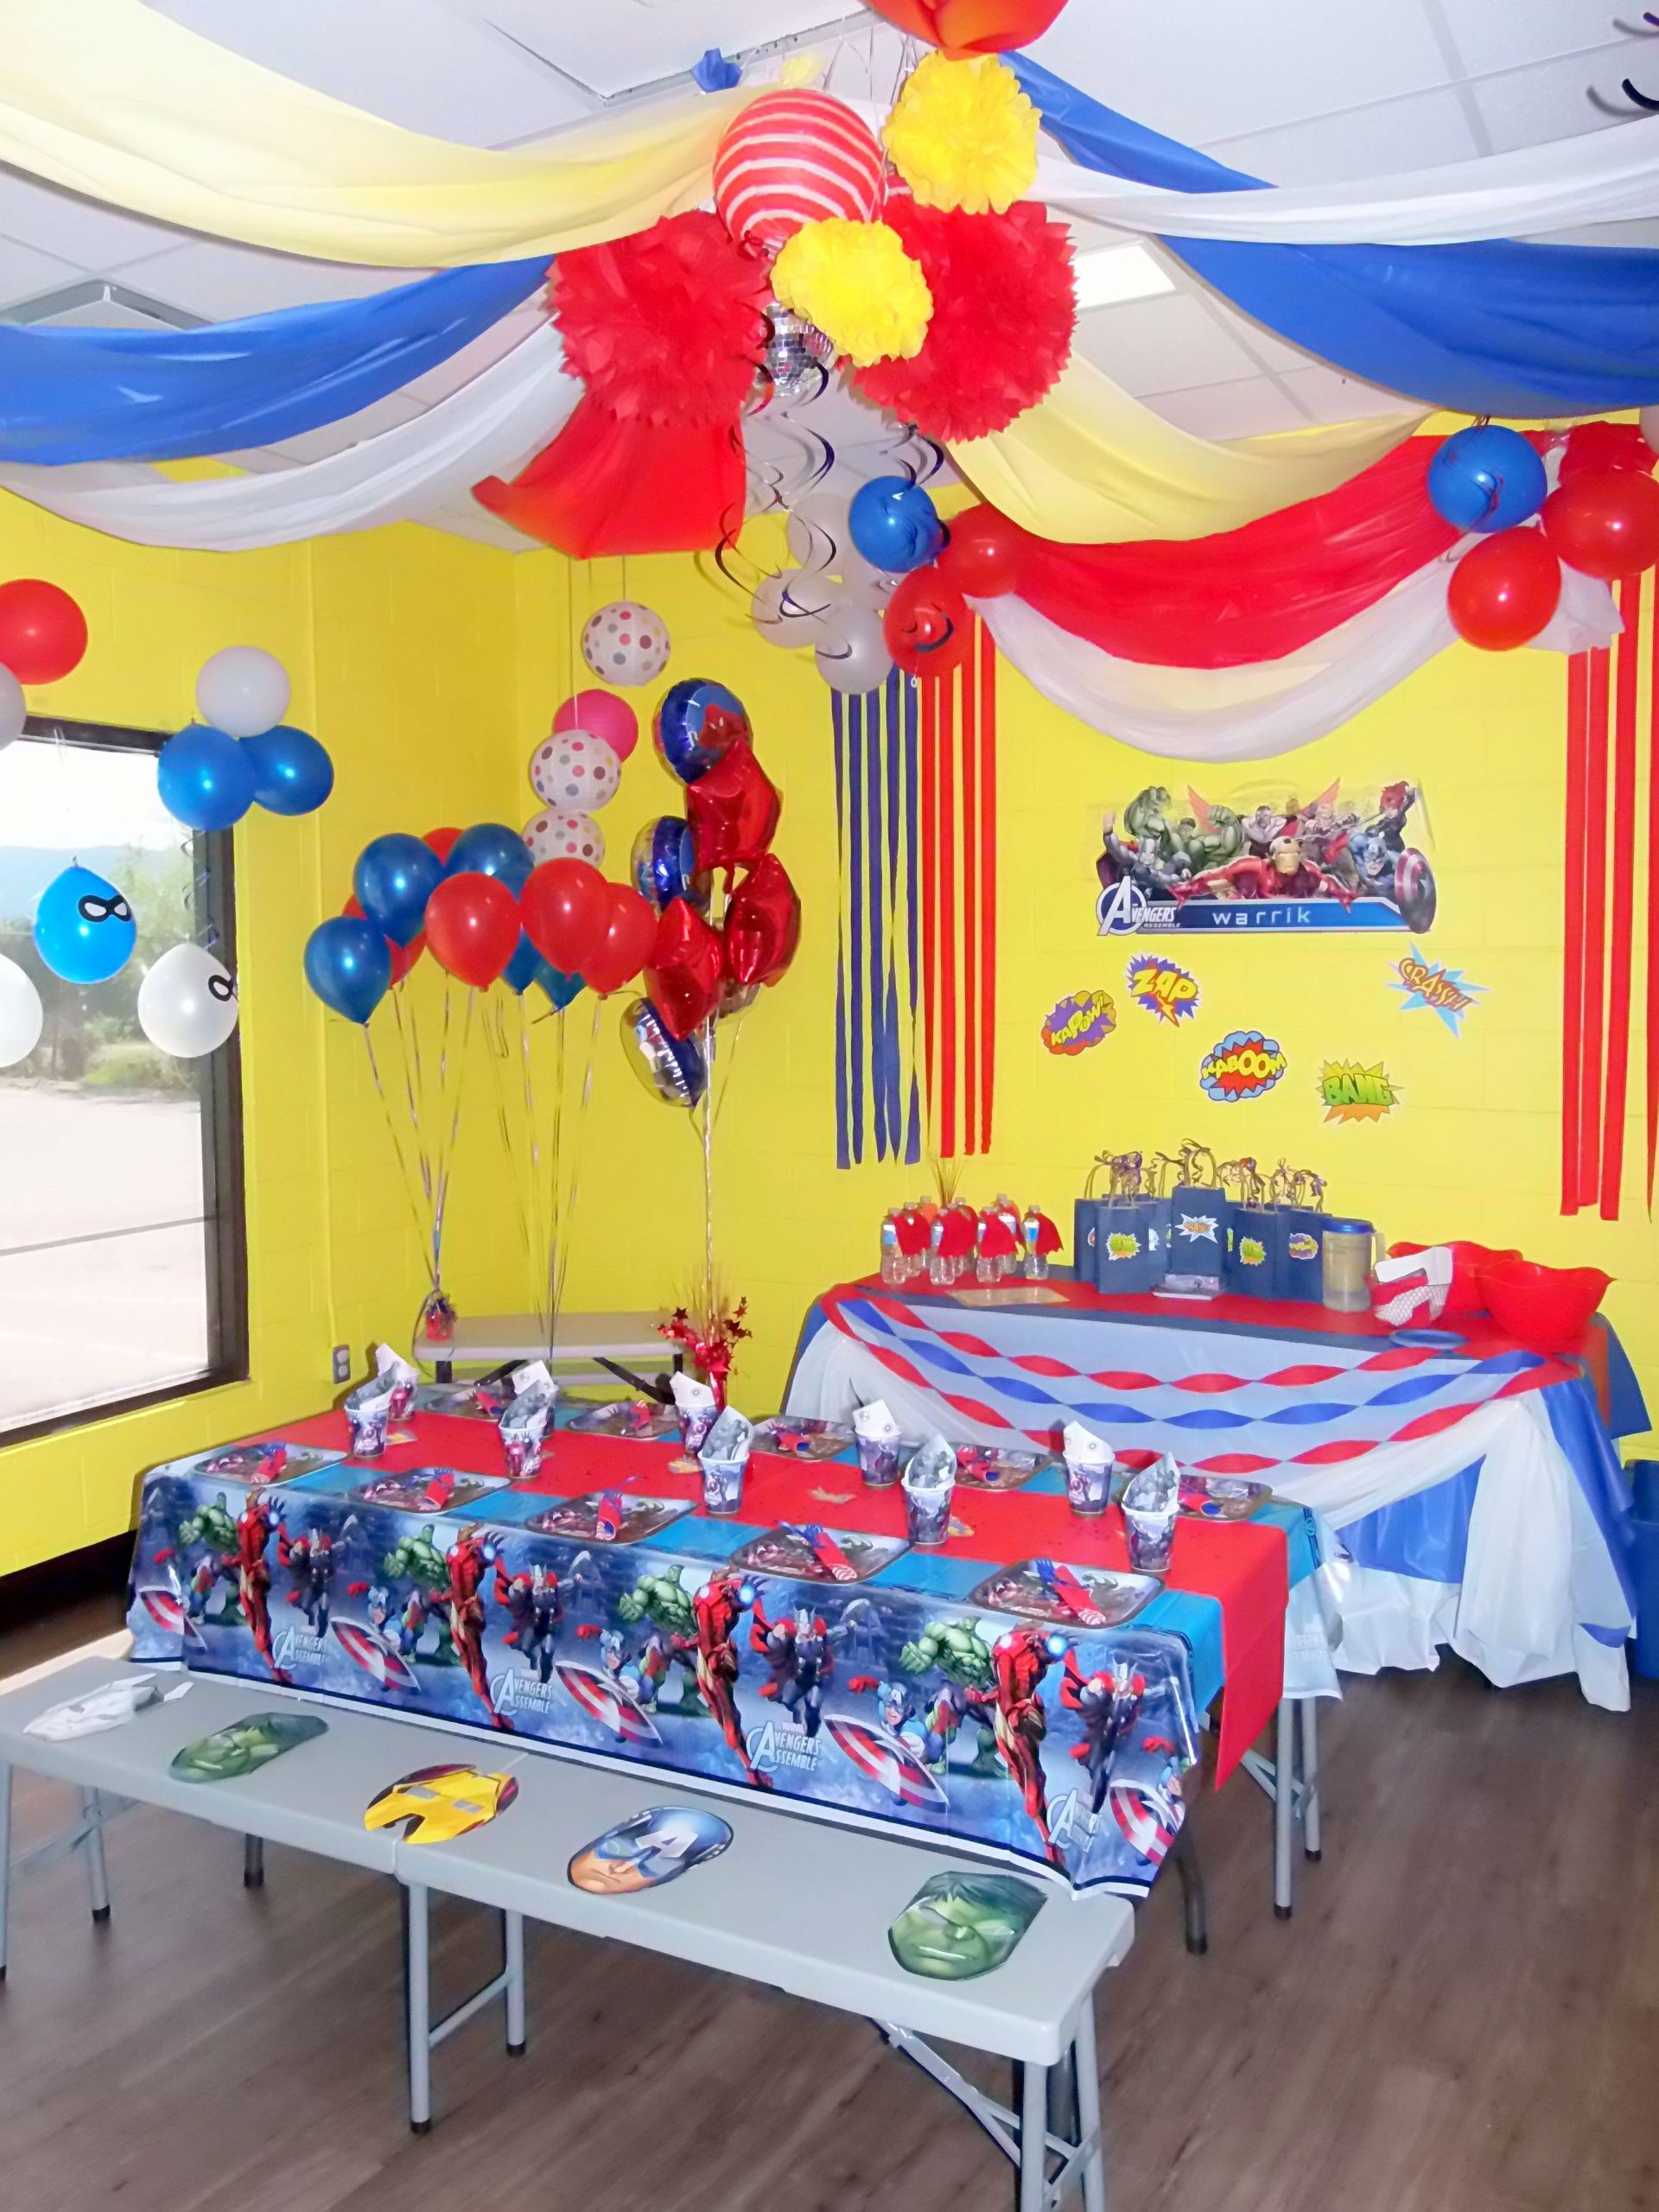 Avengers Themed Birthday Party Ideas
 Jump2It Avengers Themed Birthday party